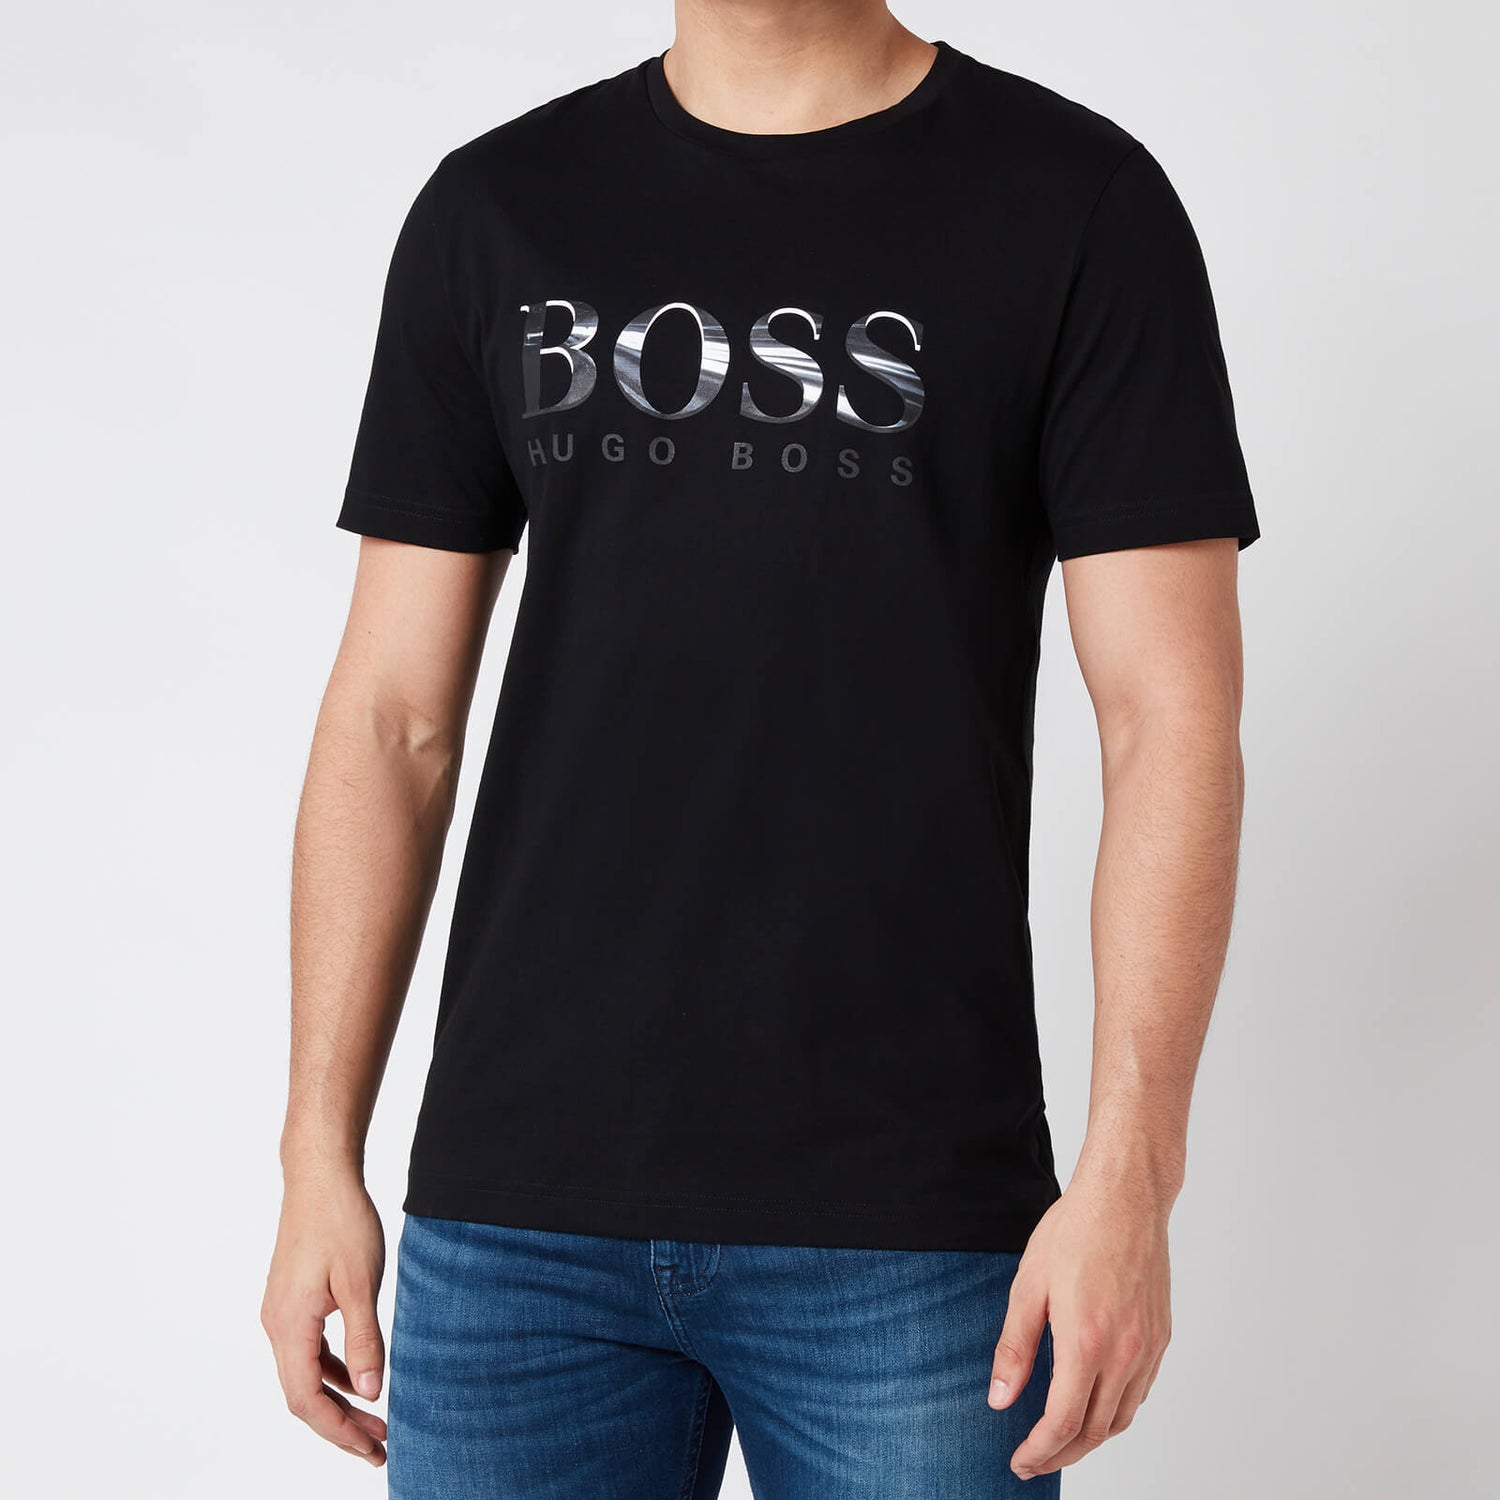 BOSS Athleisure Men's Tee 3 T-Shirt - Black